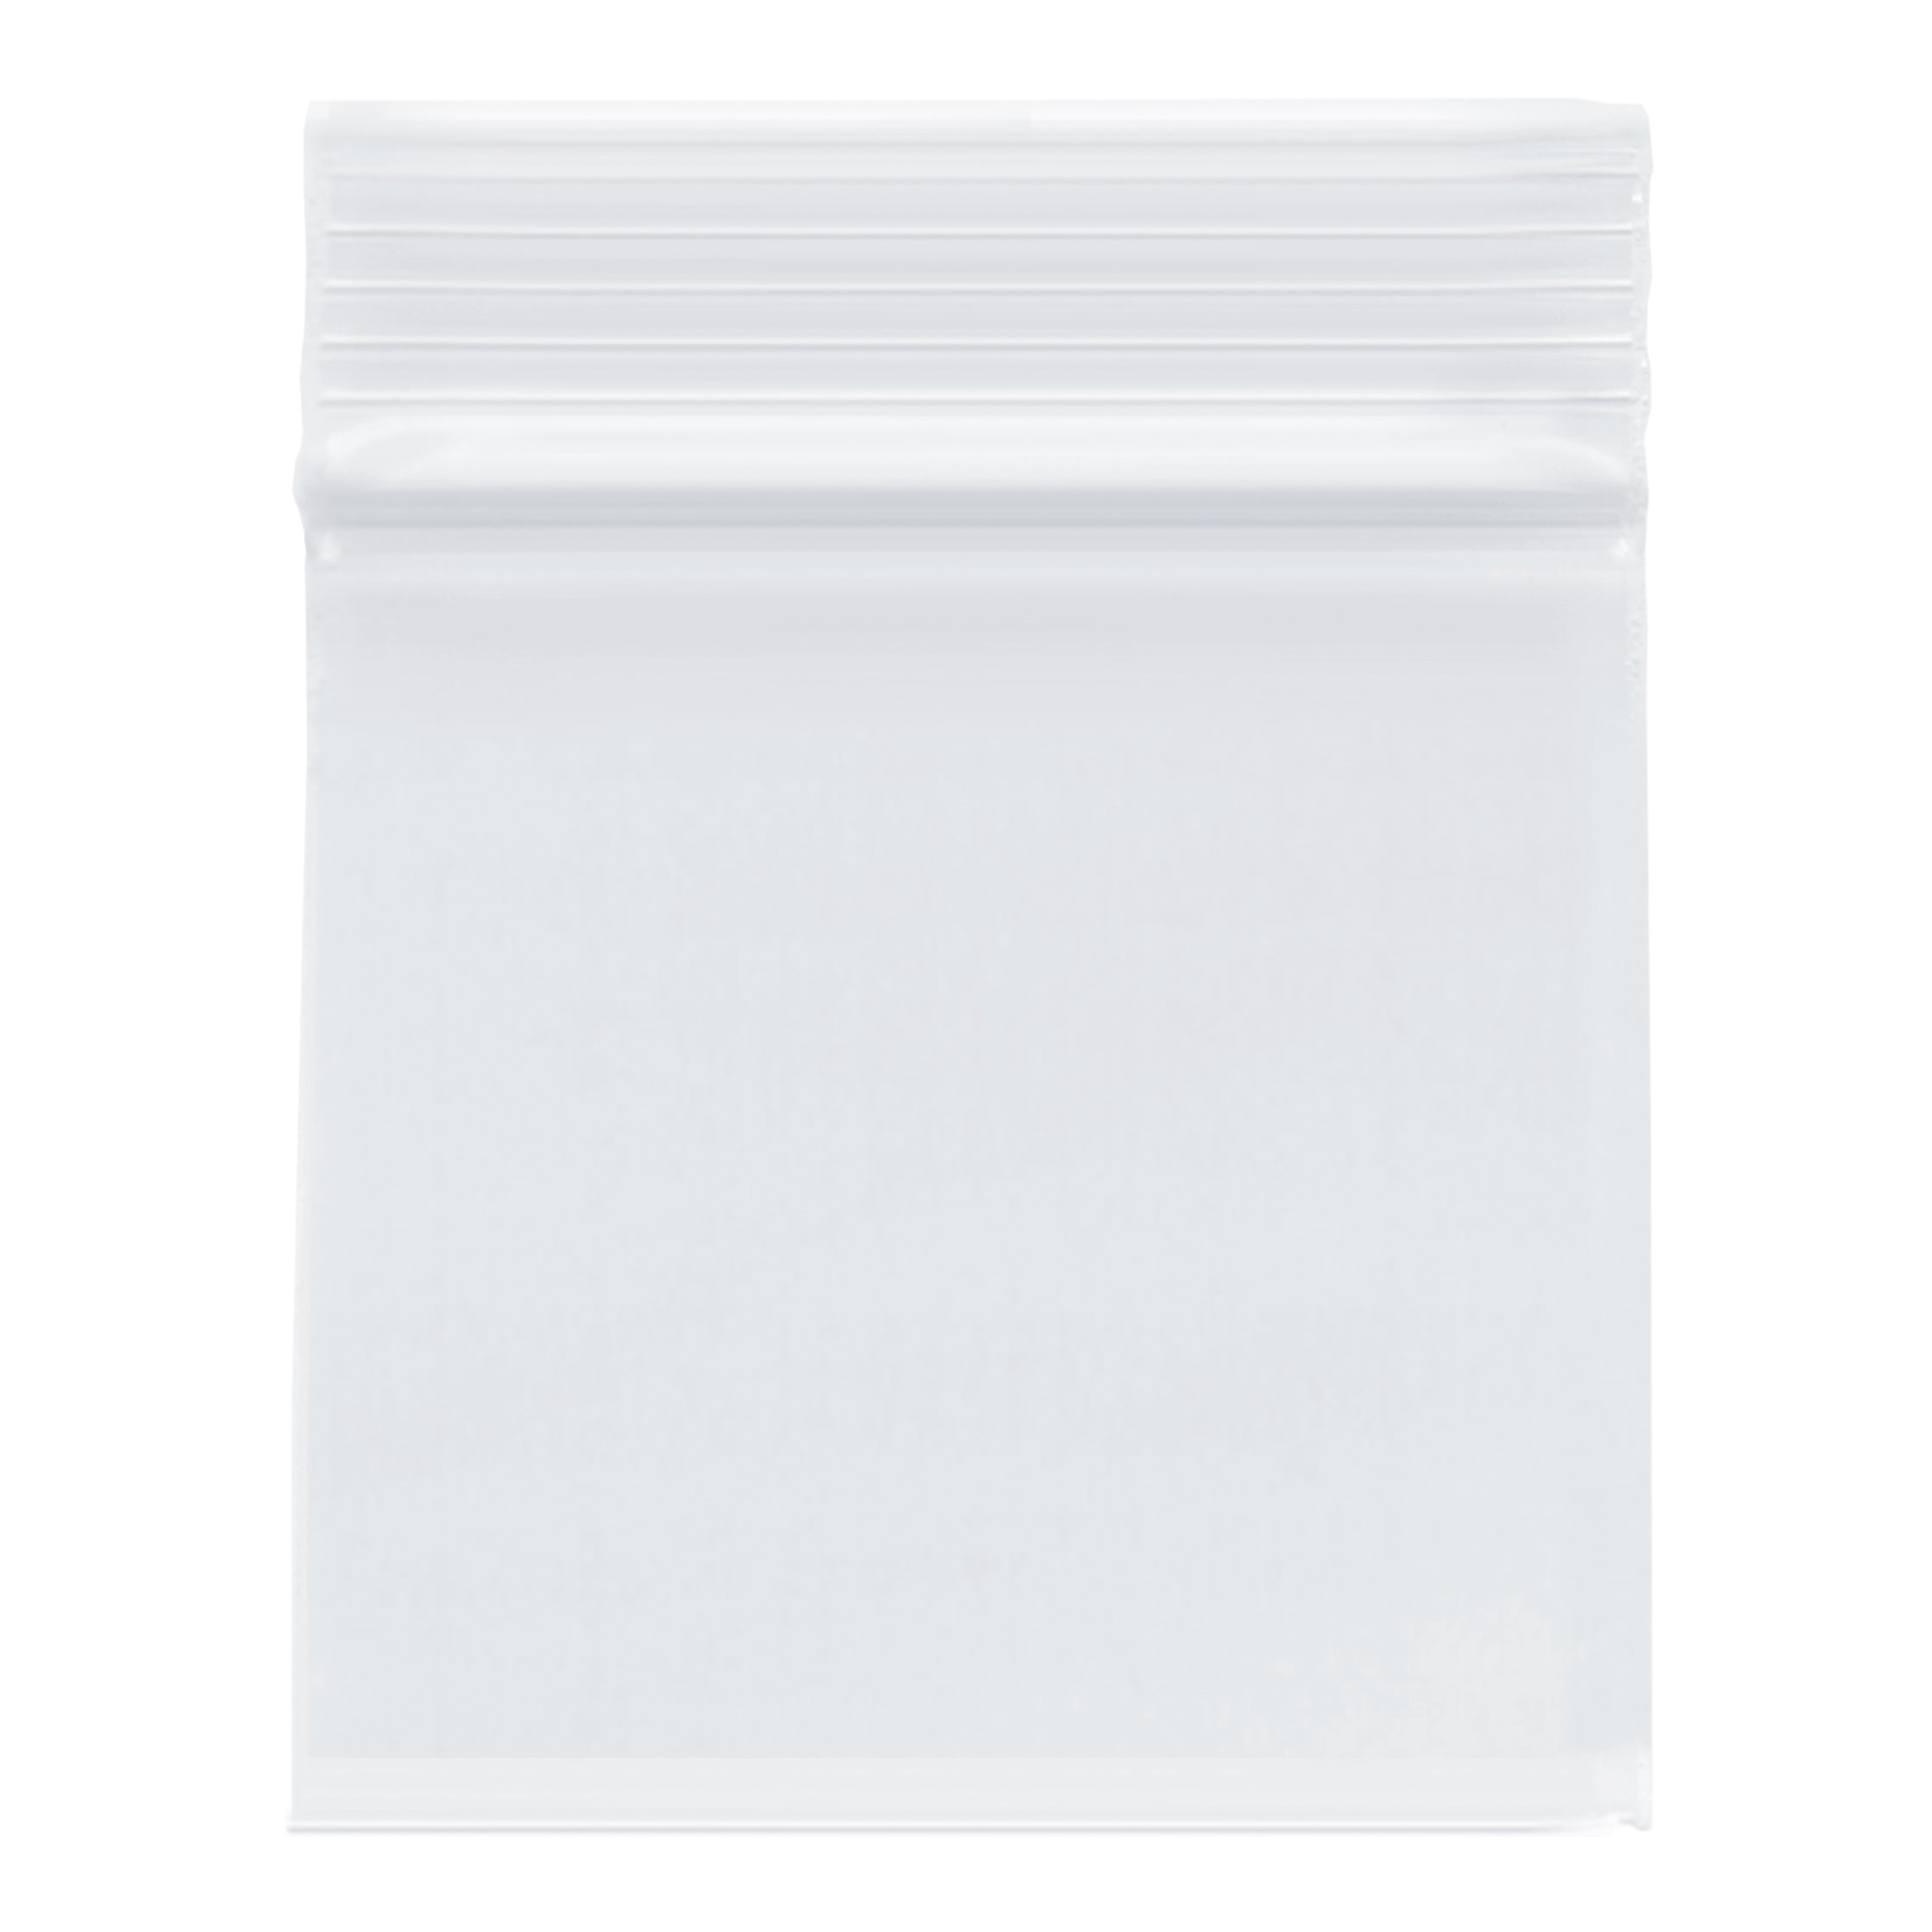 Reclosable Clear Plastic Zip Lock Bags 2-Mil Poly Zipper Seal Jewelry Baggies